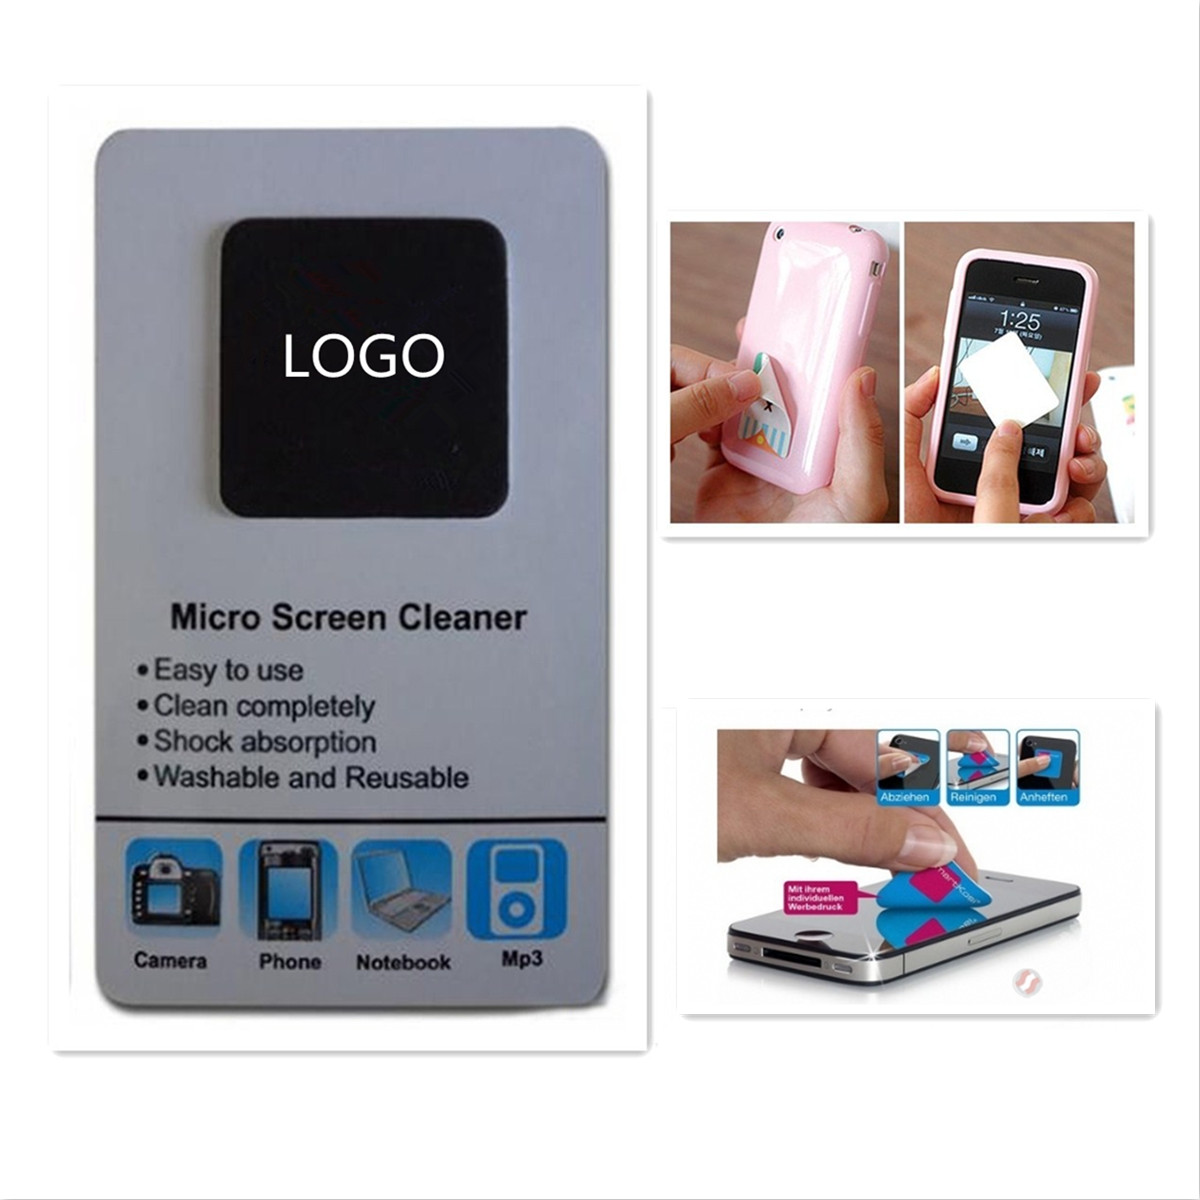 Superfine fibre adhensive cell phone screen wipe / screen cleaner